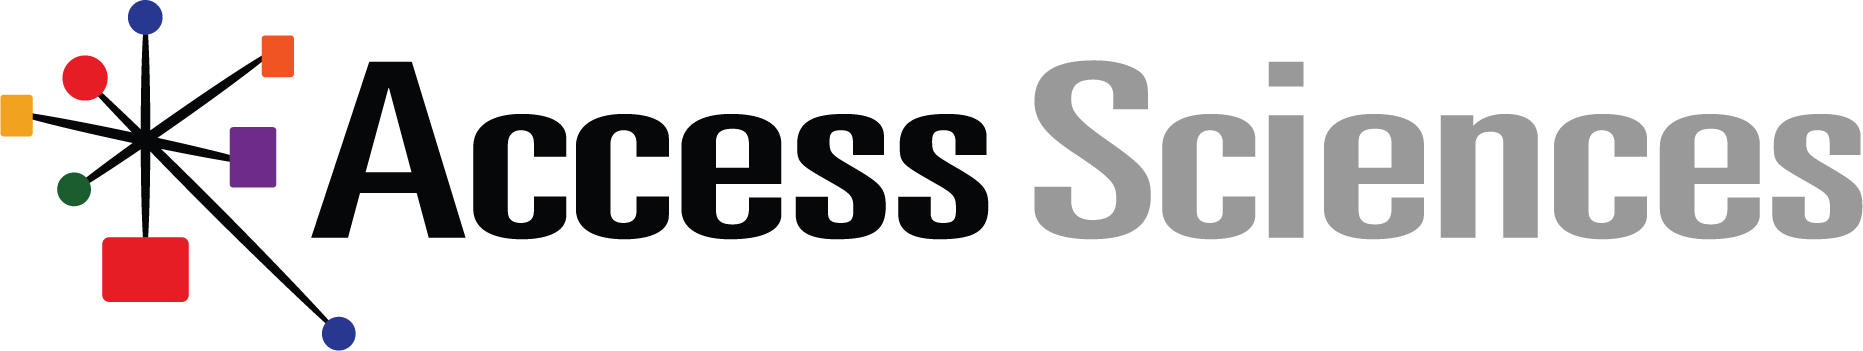 Access Sciences Corporation Company Logo